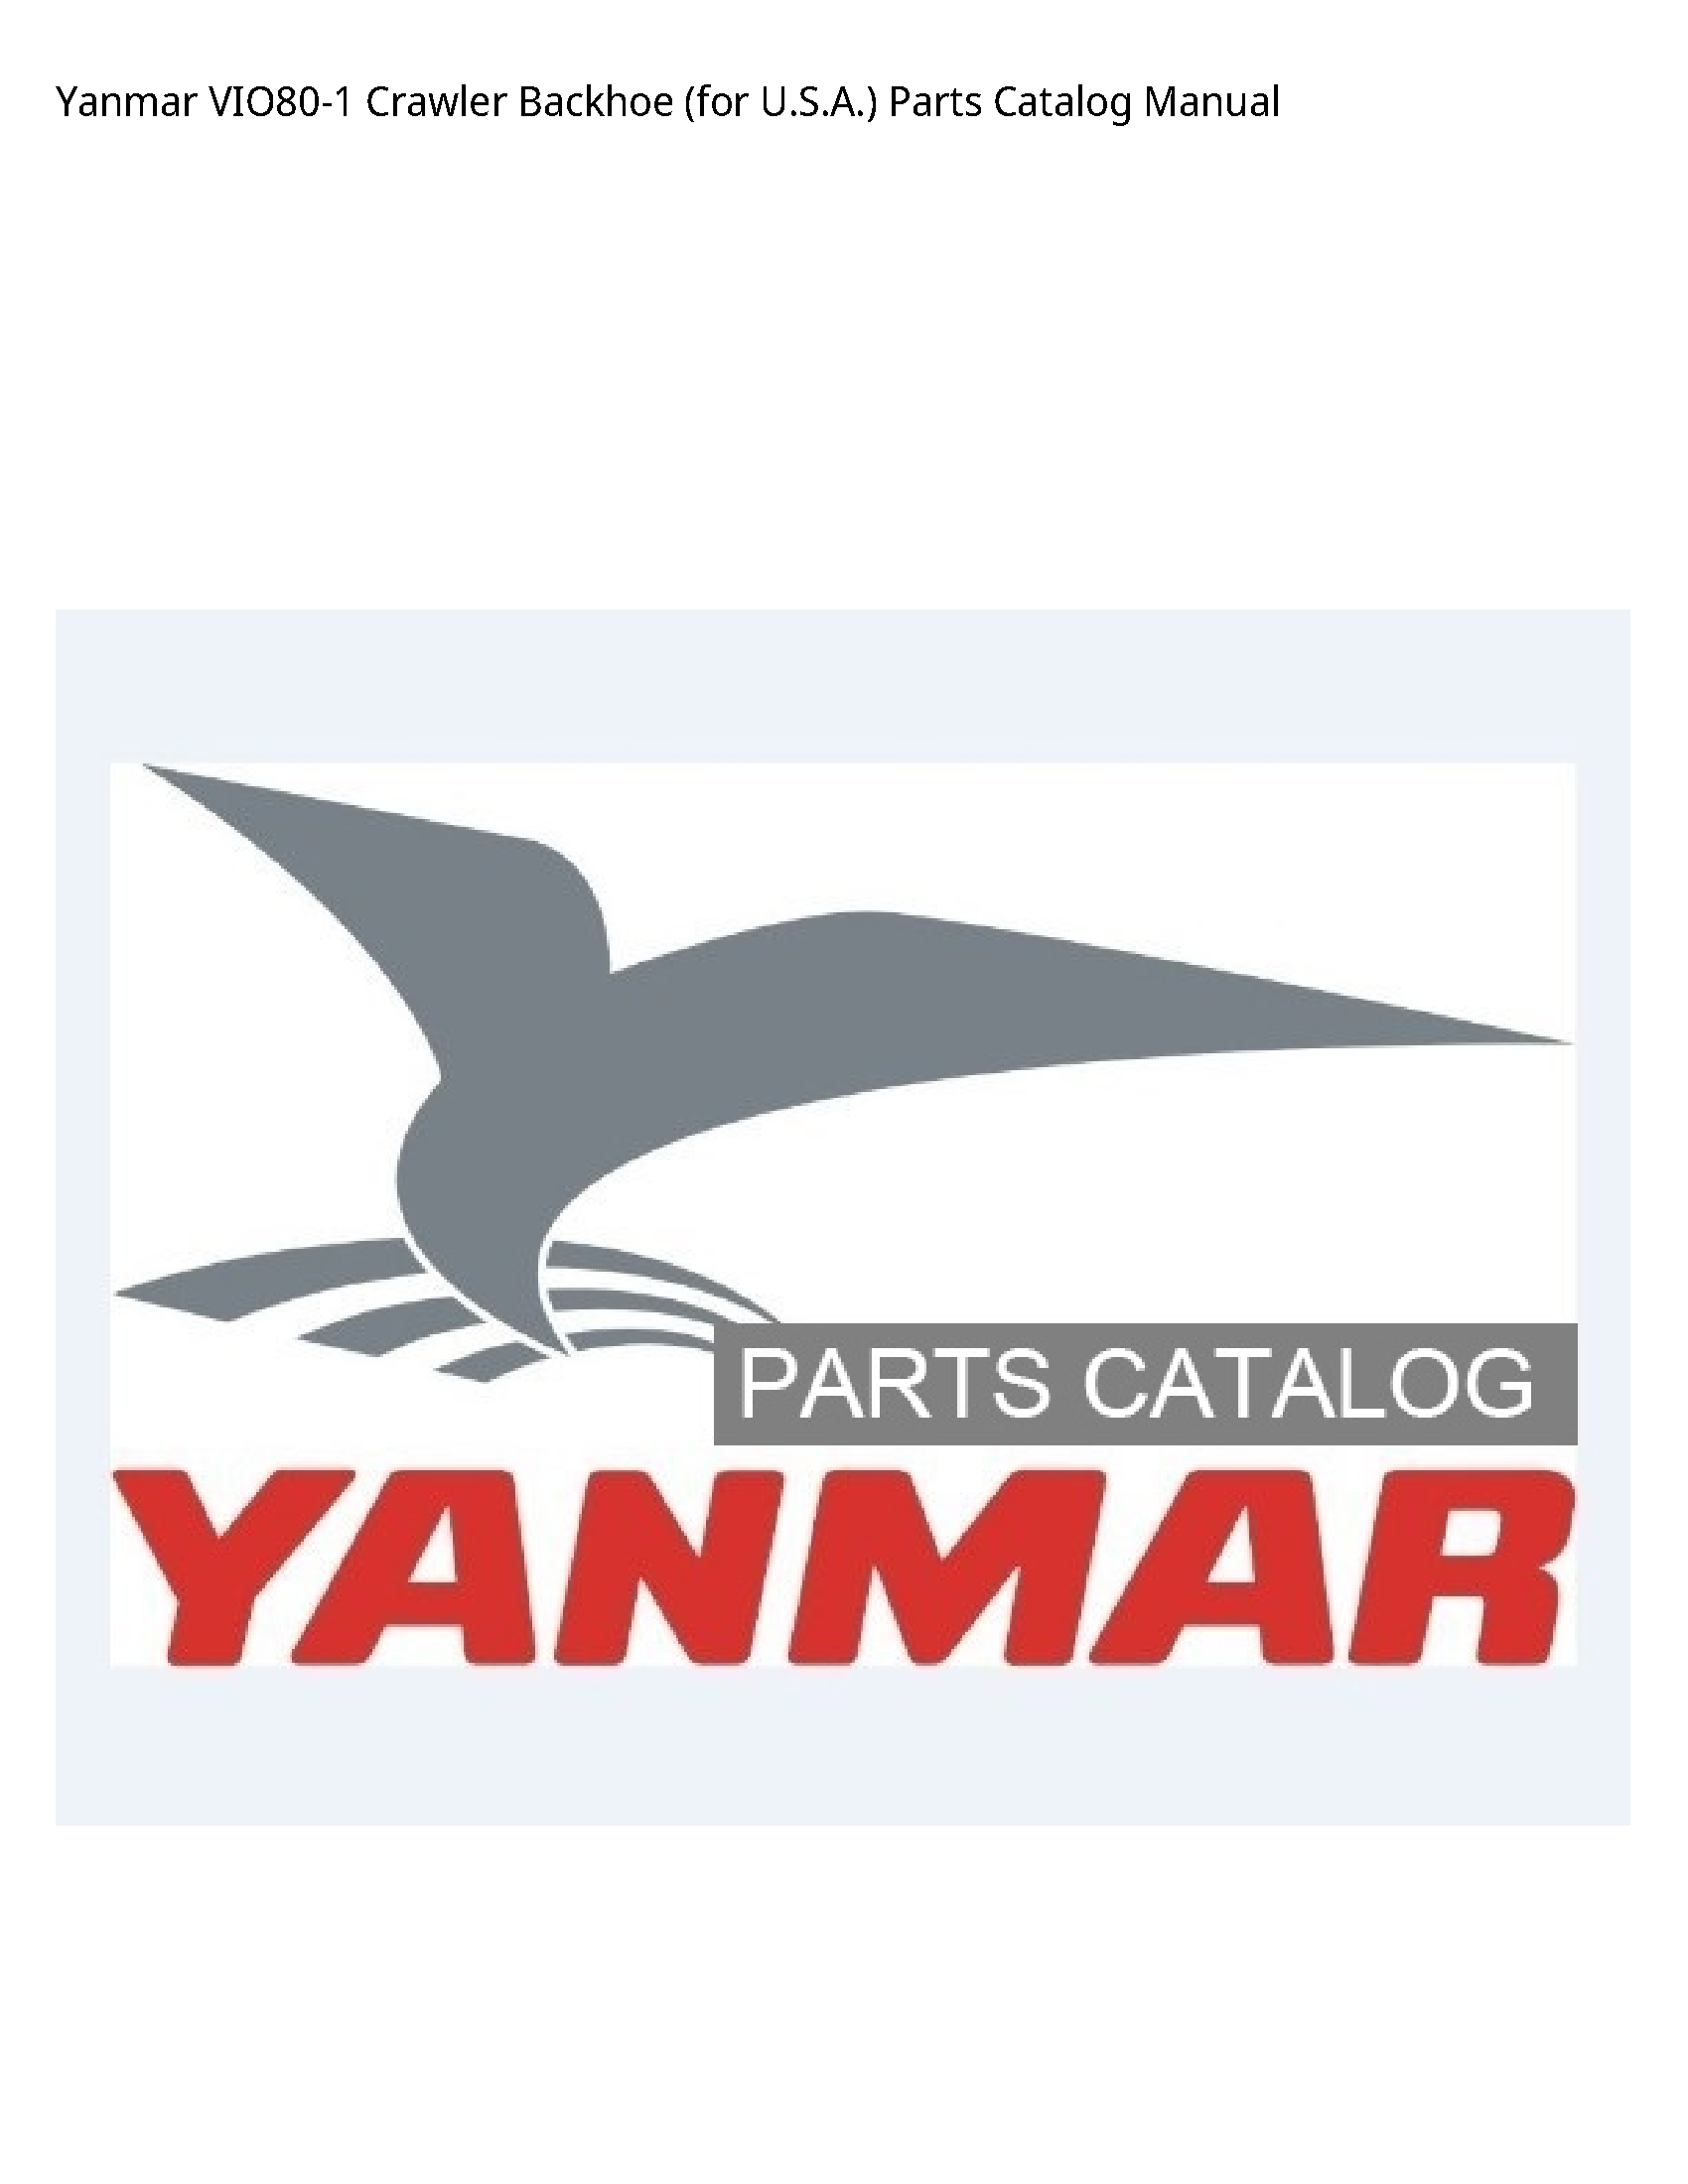 Yanmar VIO80-1 Crawler Backhoe (for U.S.A.) Parts Catalog manual